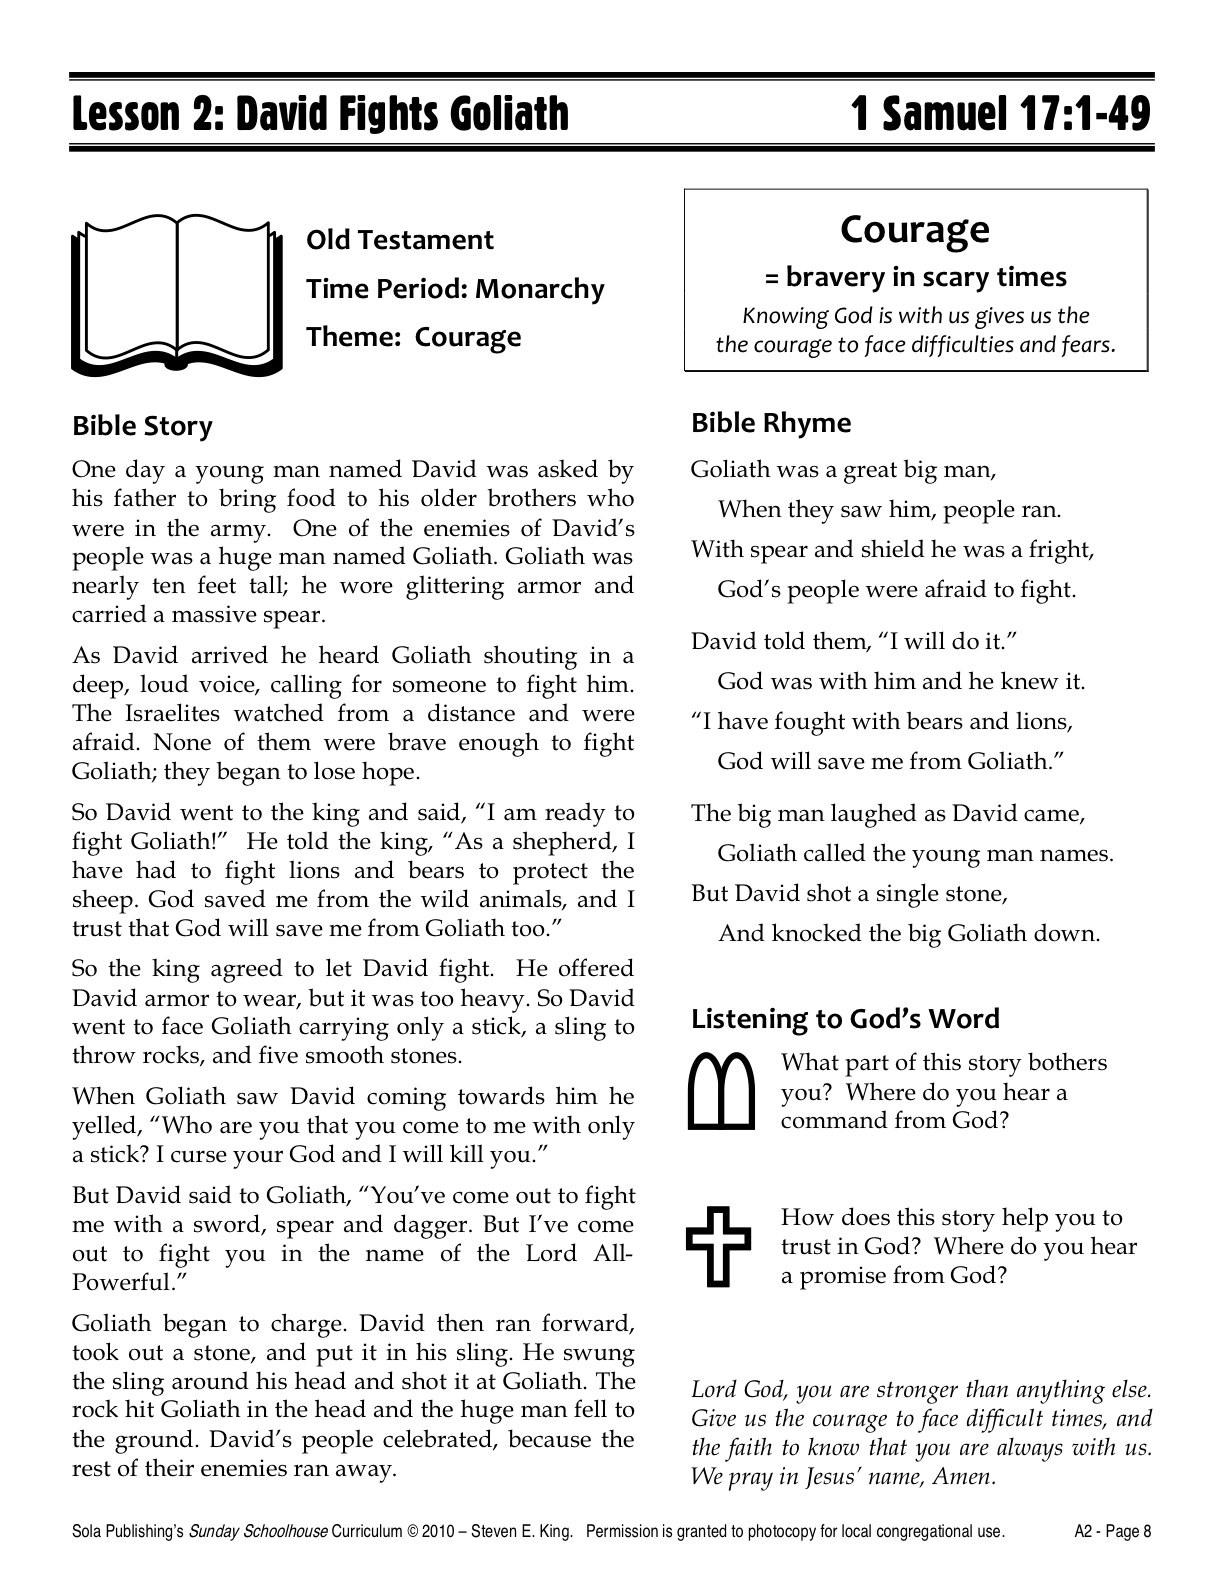 David and Goliath Sunday School Worksheets